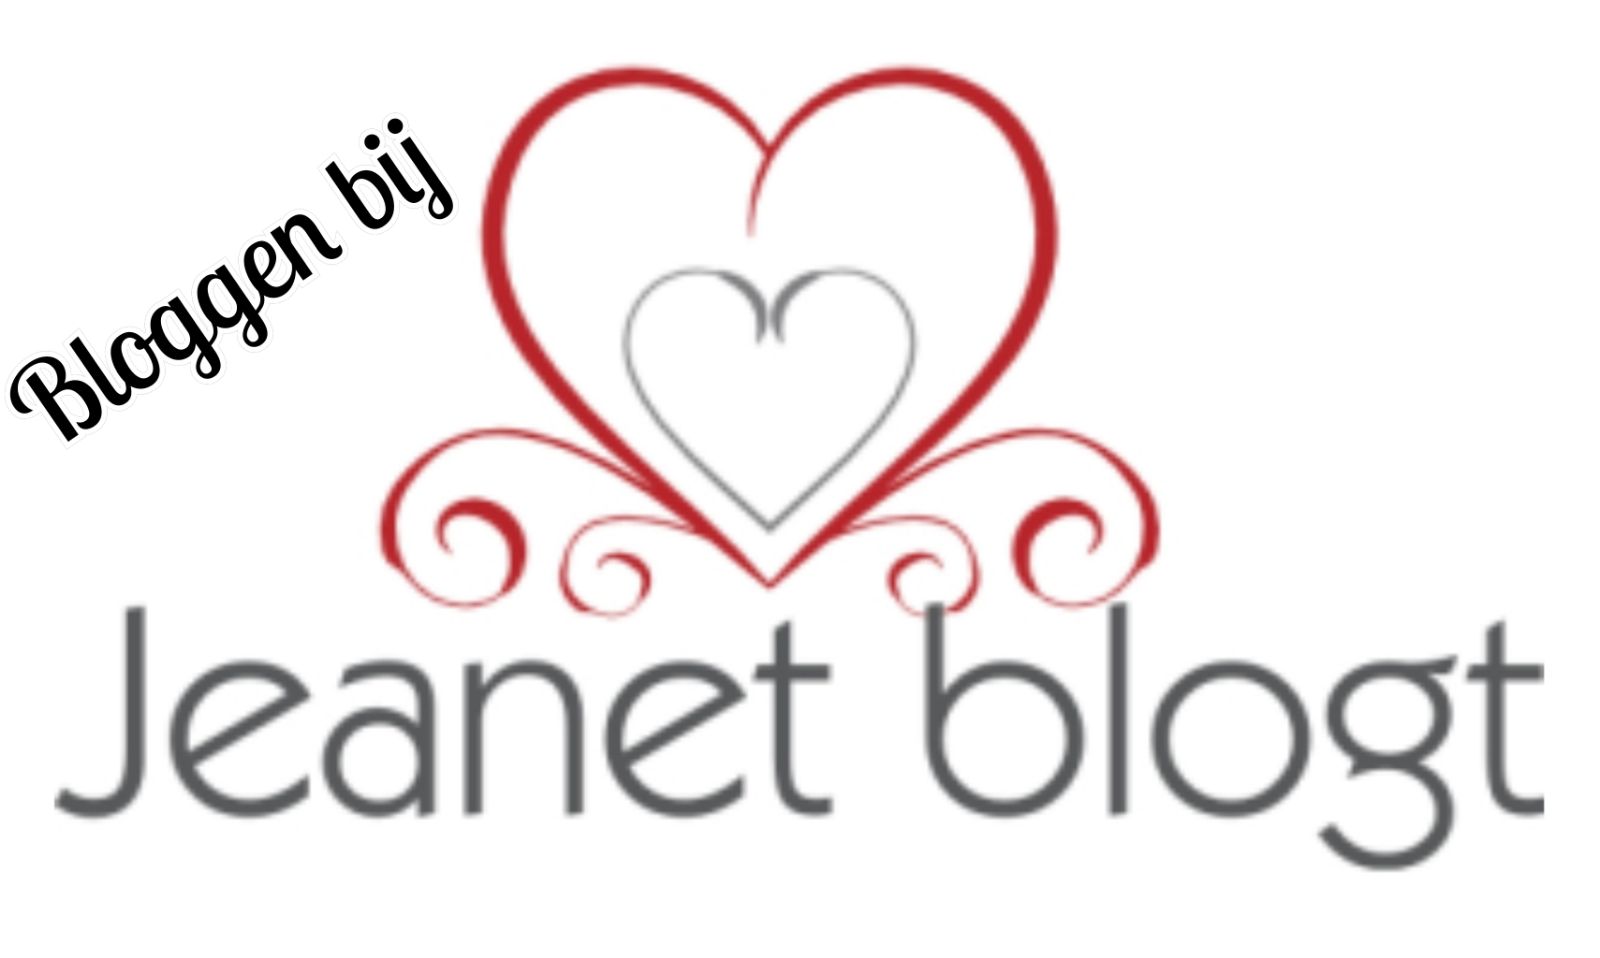 Bloggen, als gastblogger, bij Jeanetblogt.